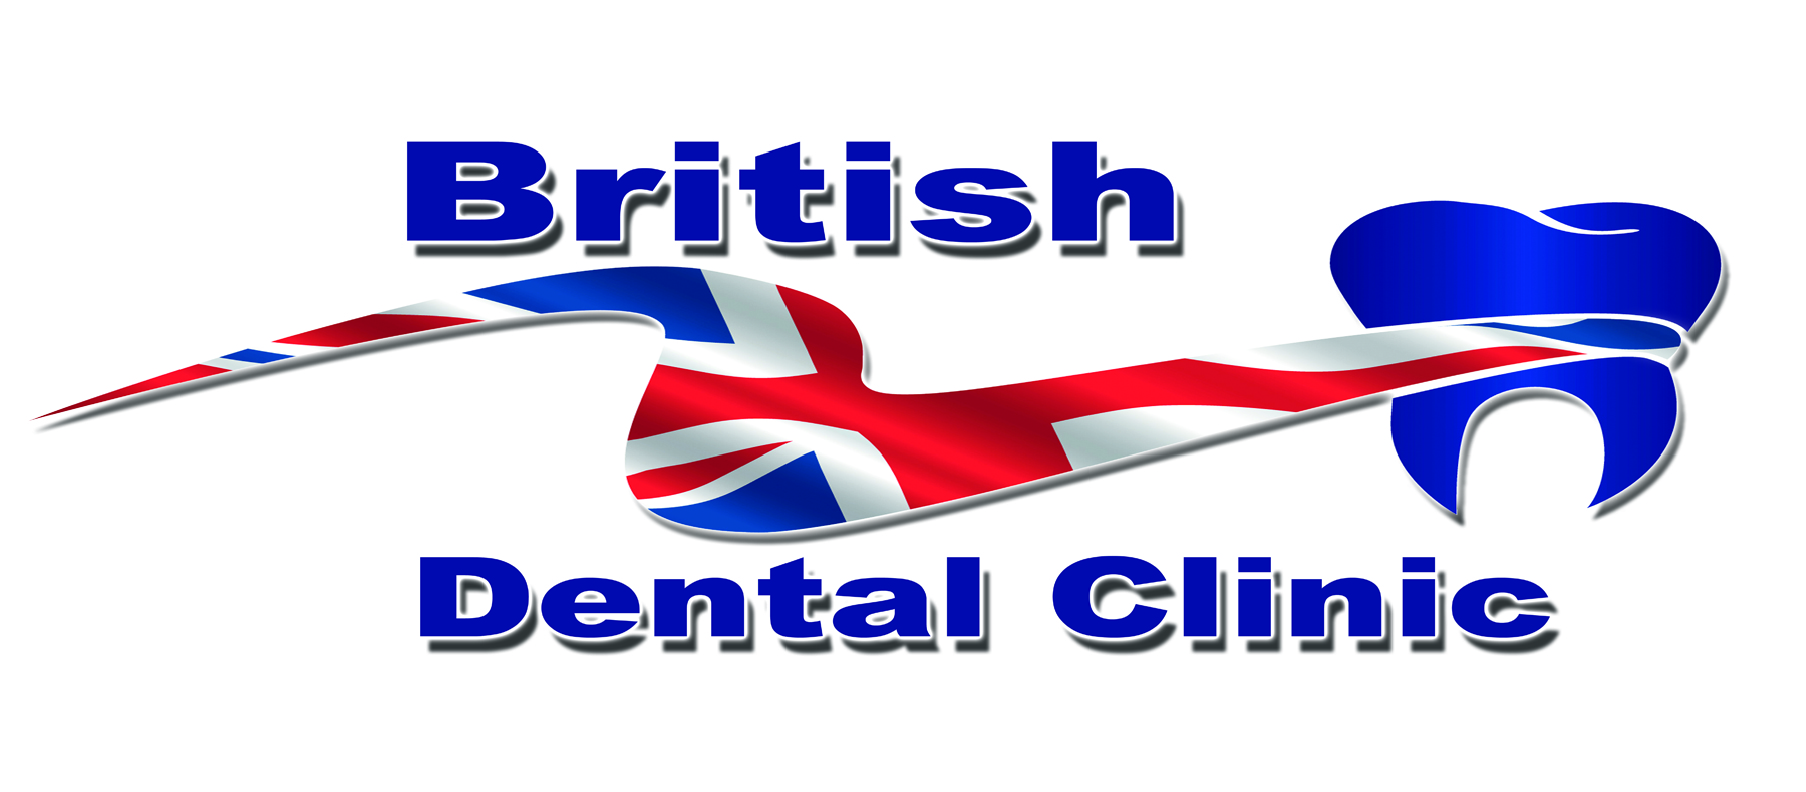 The British dental Clinic